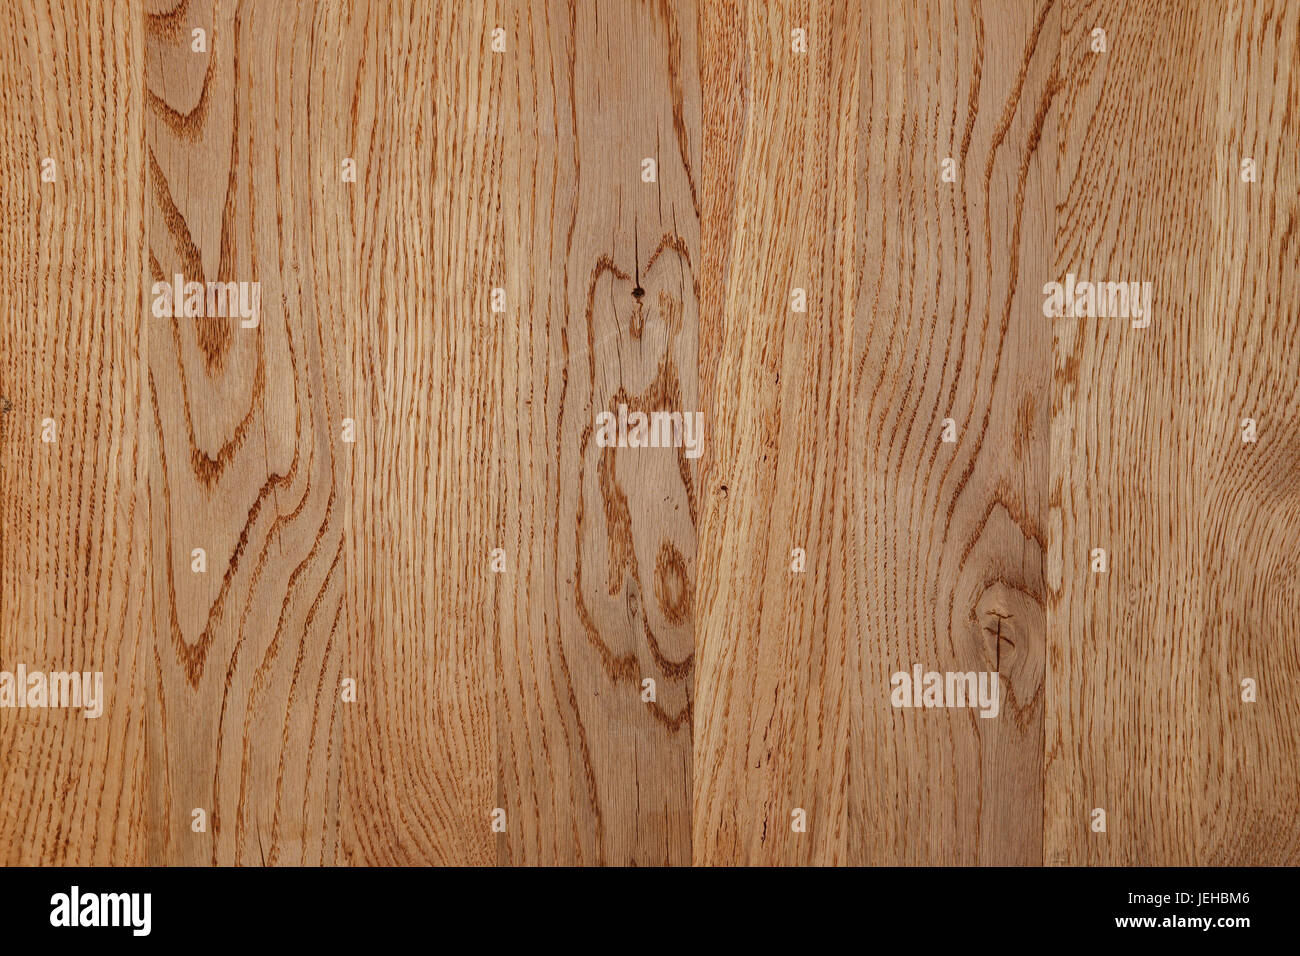 Close-up image of natural wooden texture. Organic texture. Stock Photo